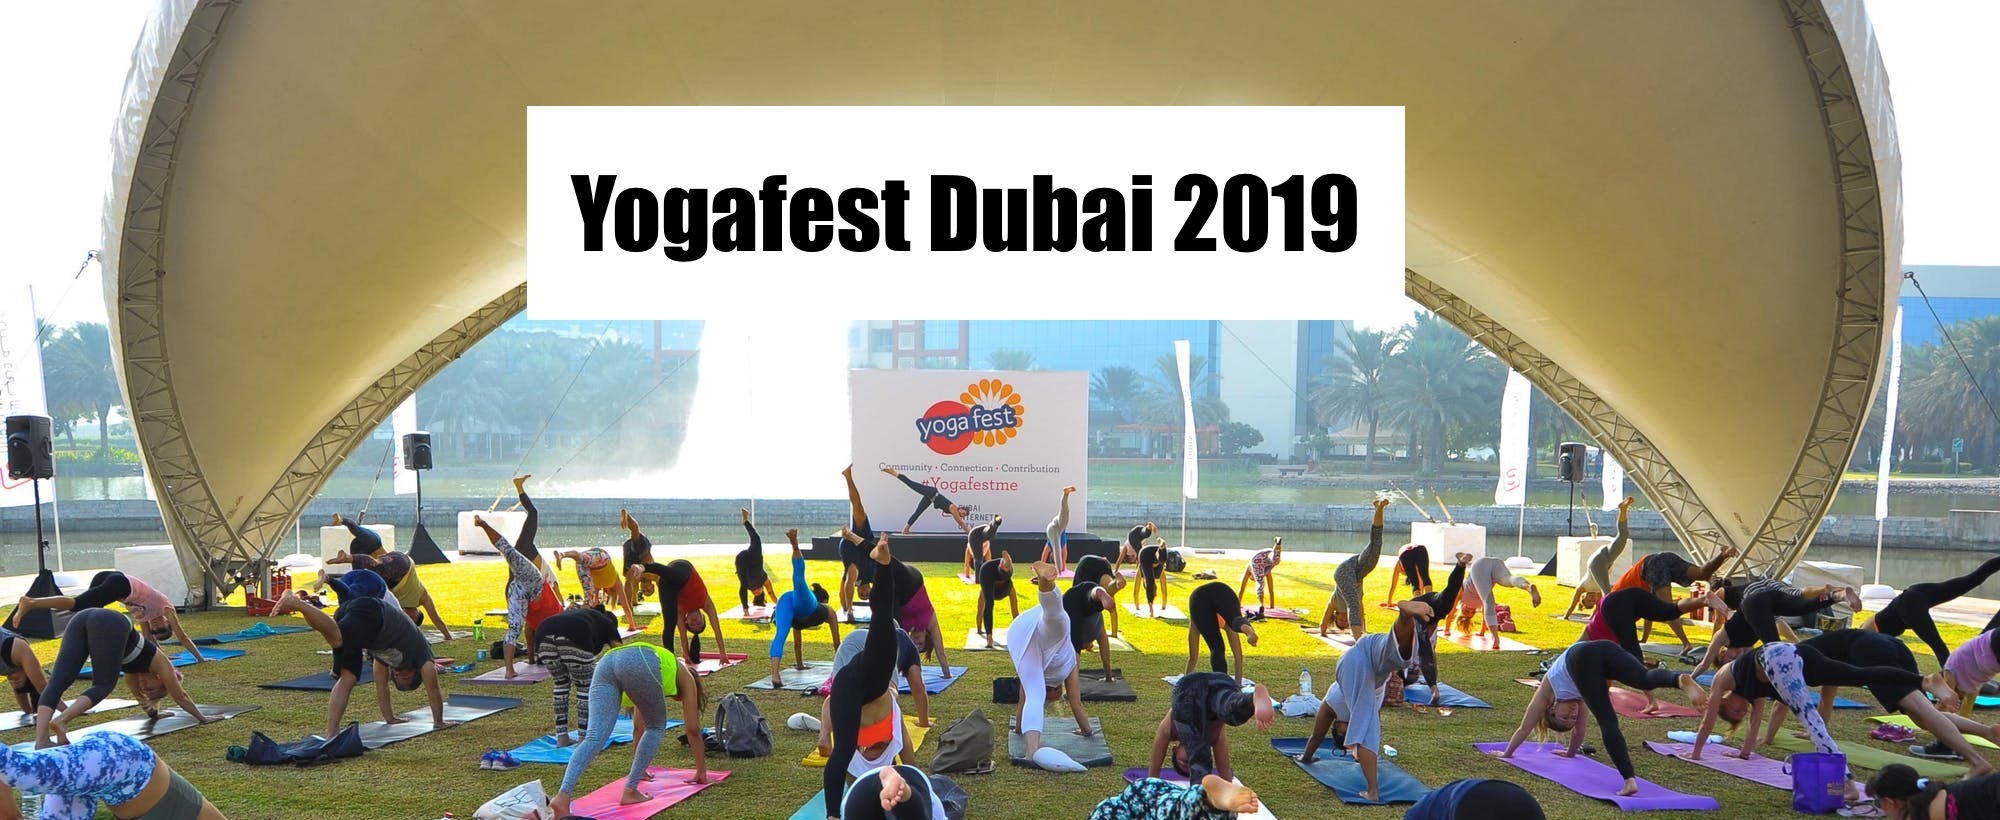 Yogafest Dubai 2019 - Coming Soon in UAE